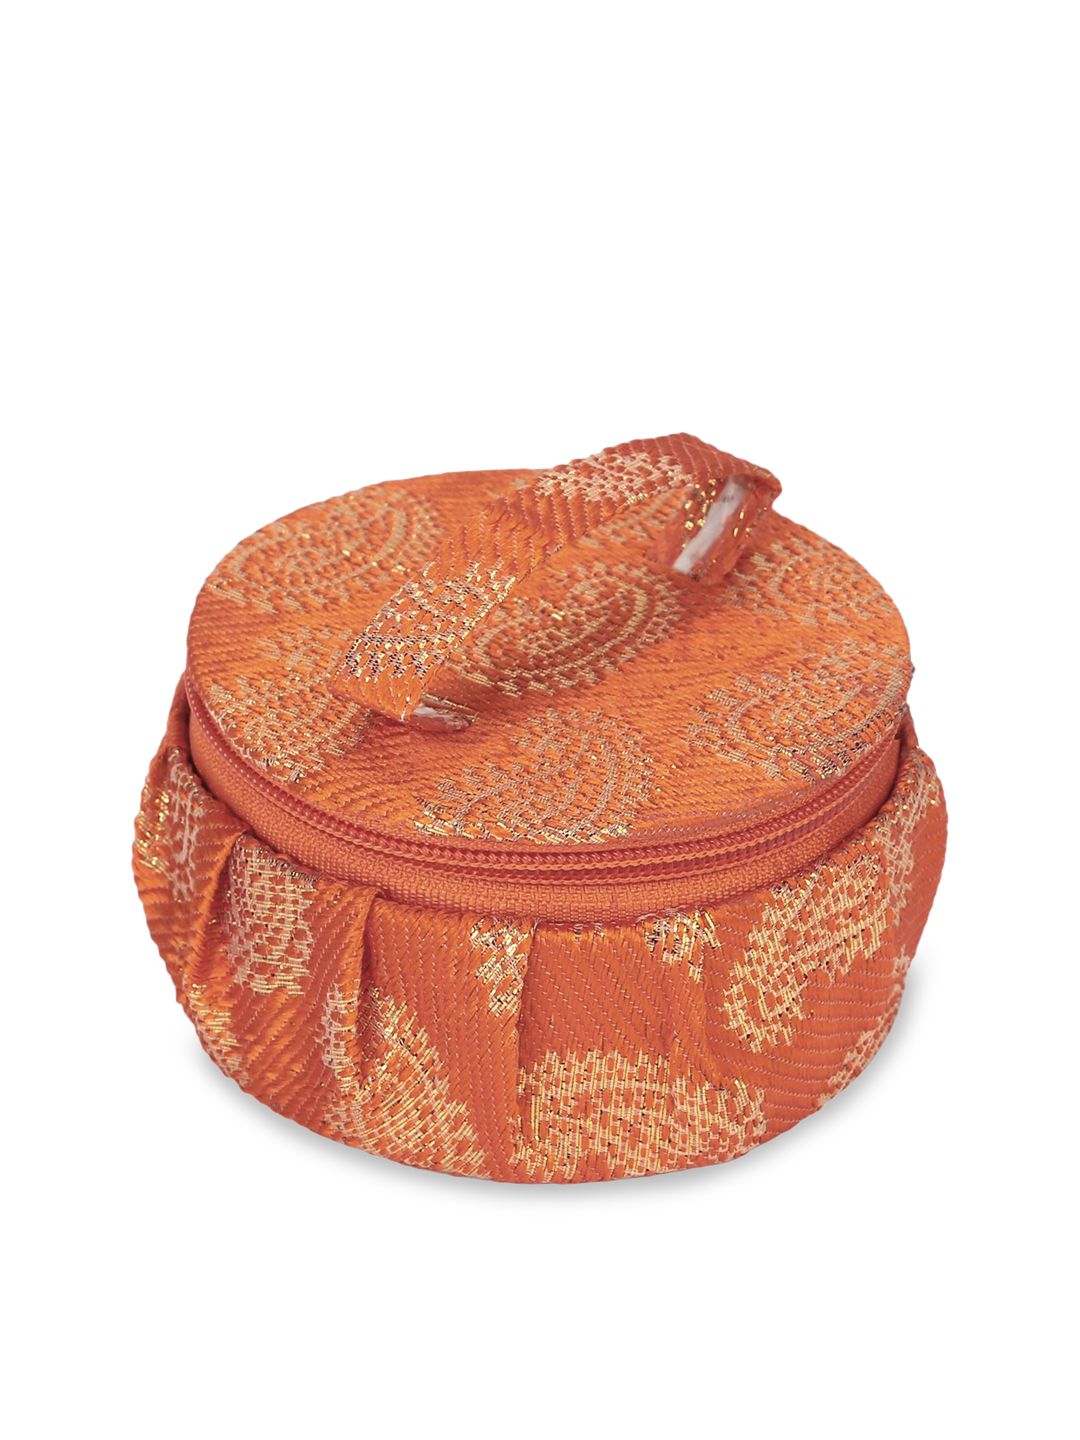 Aditi Wasan Women Orange & Beige Printed Jewellery Organiser Price in India